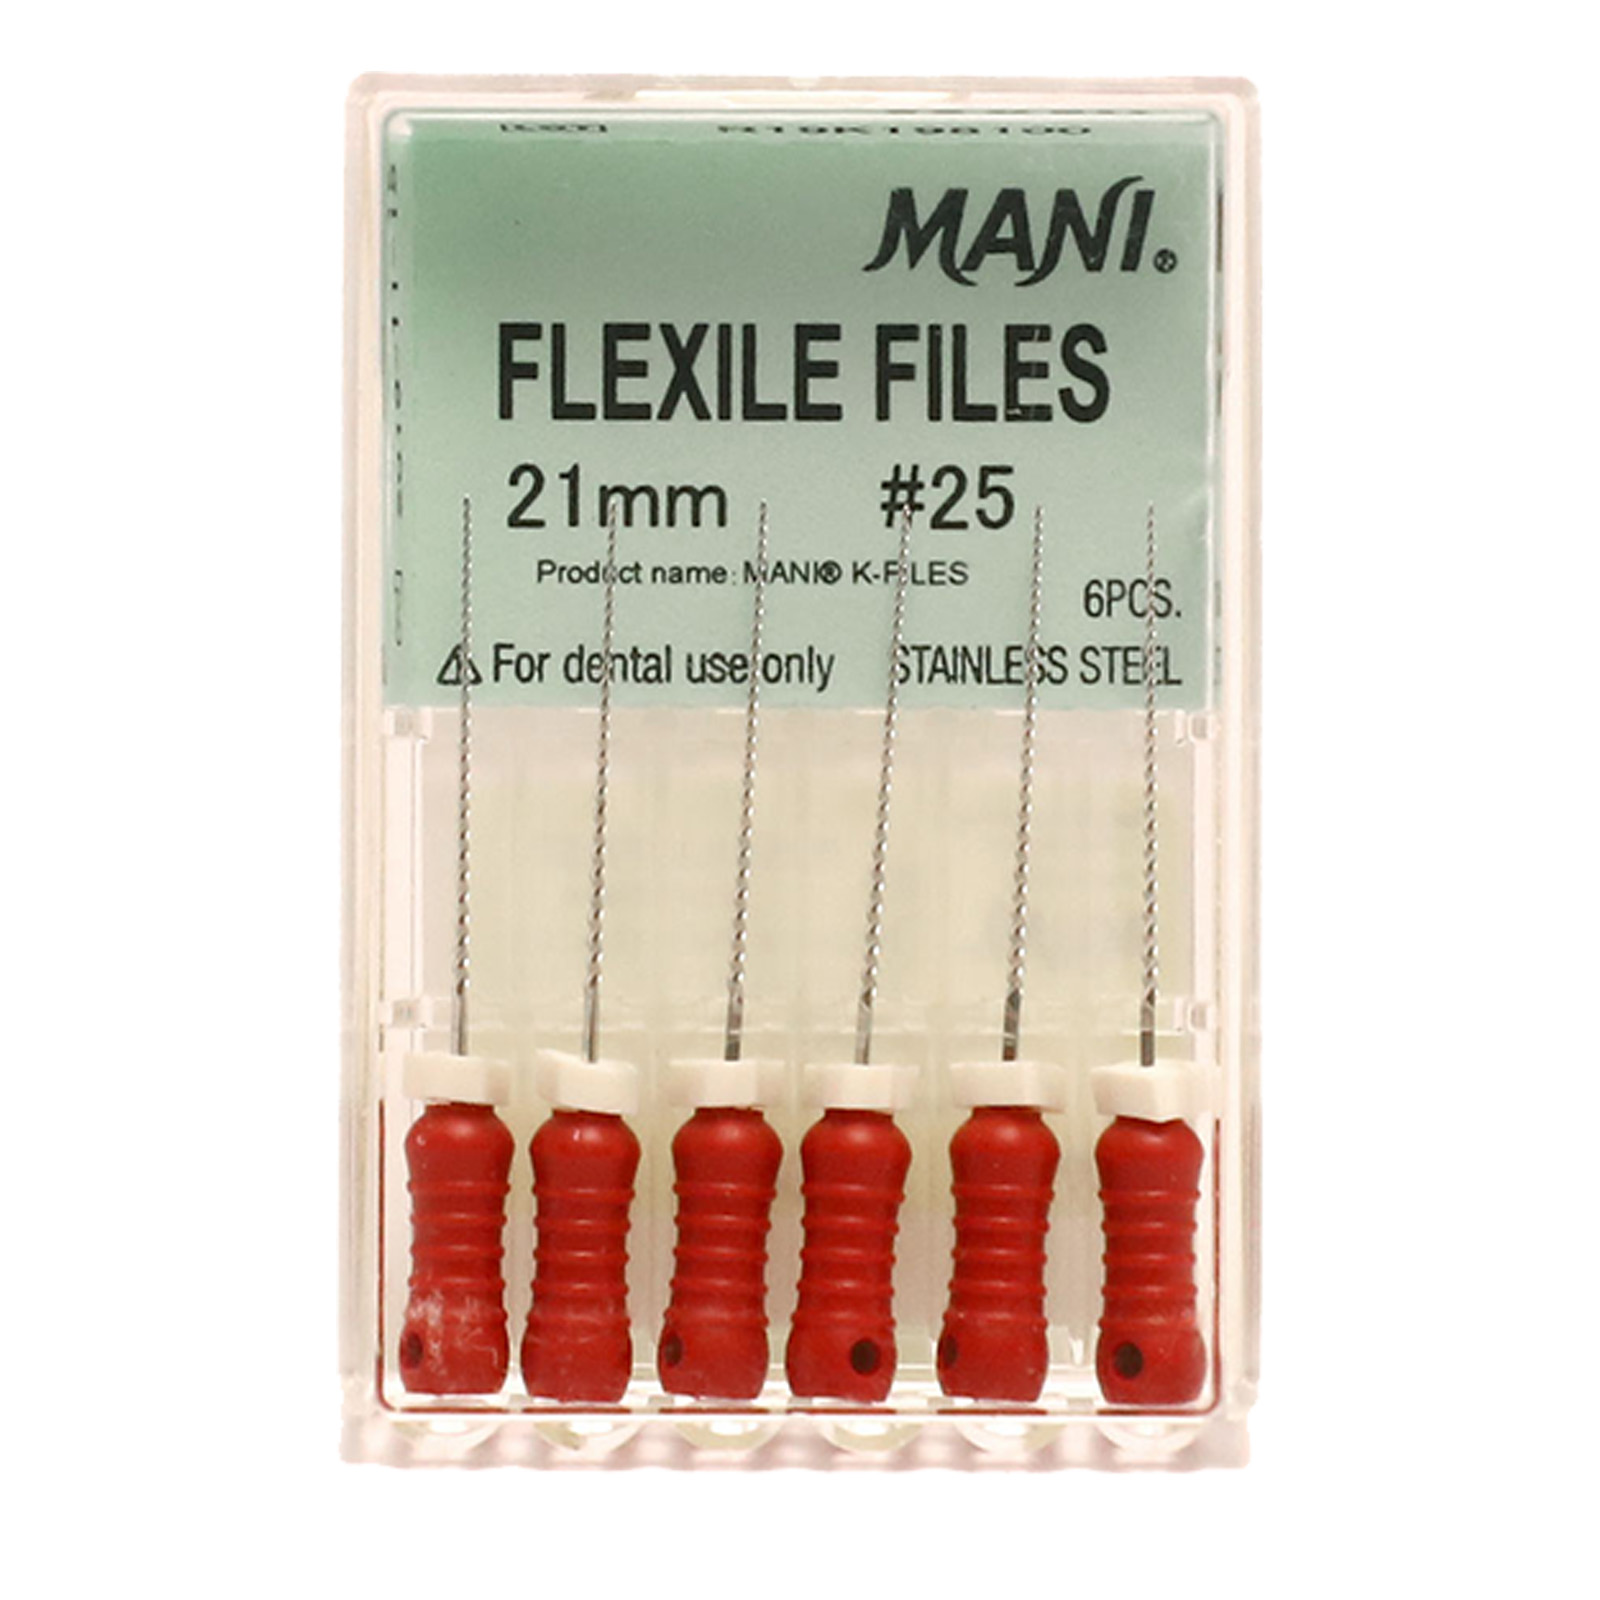 Mani Flexi Files 25 21mm